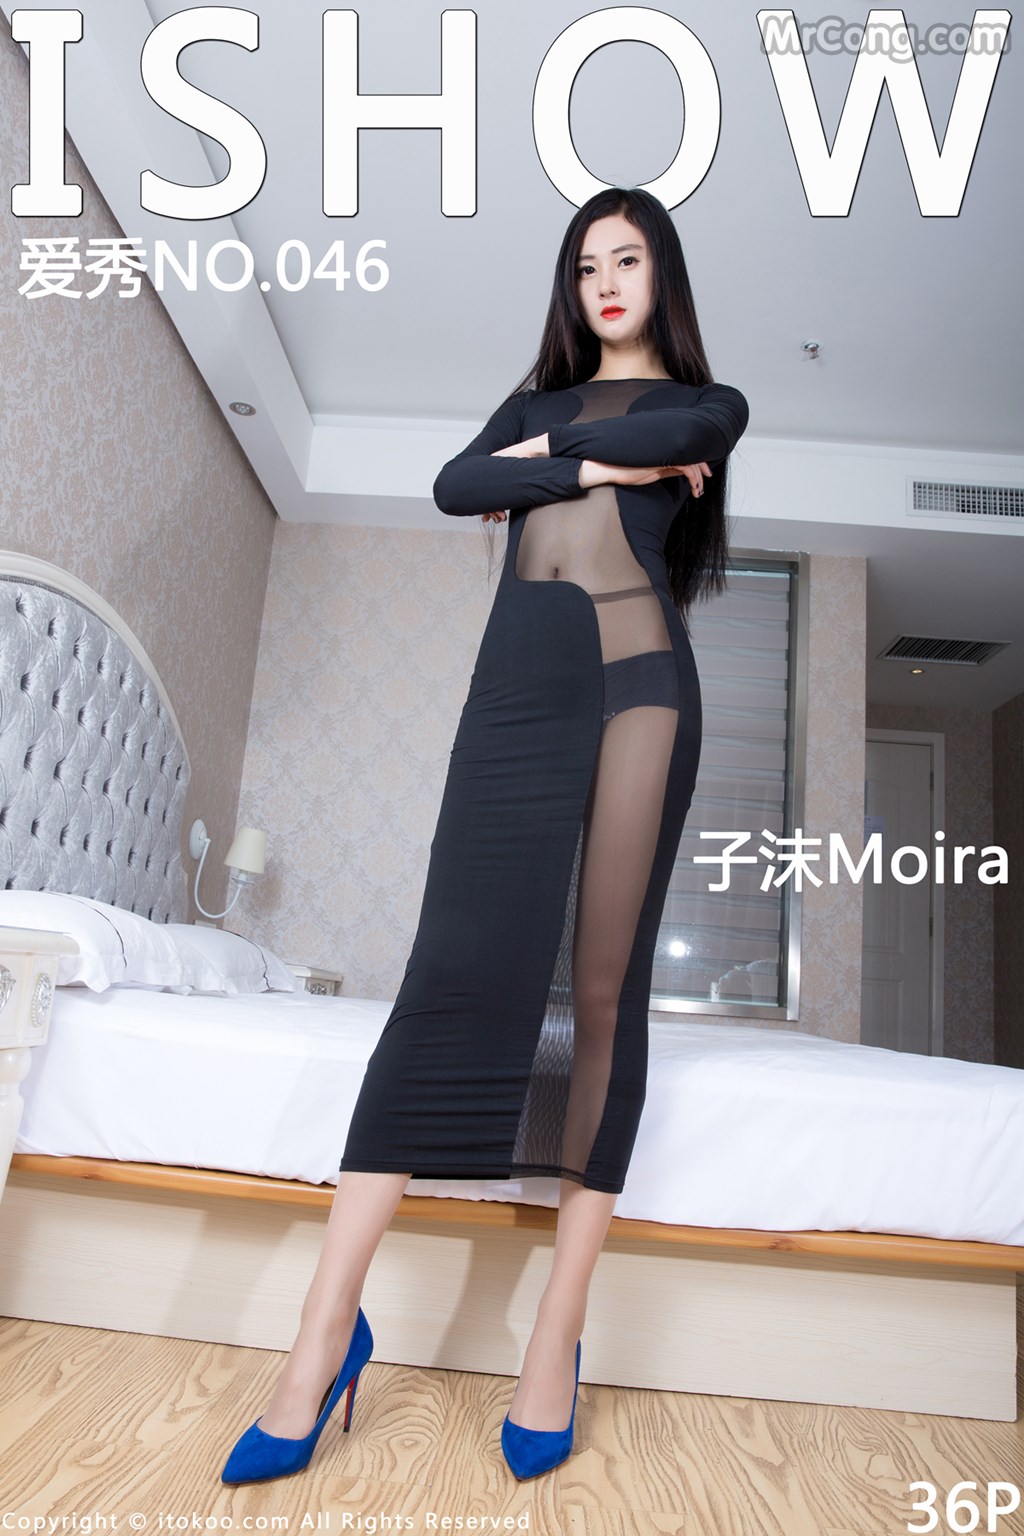 ISHOW No.046: Model Moira (子 沫) (37 photos)